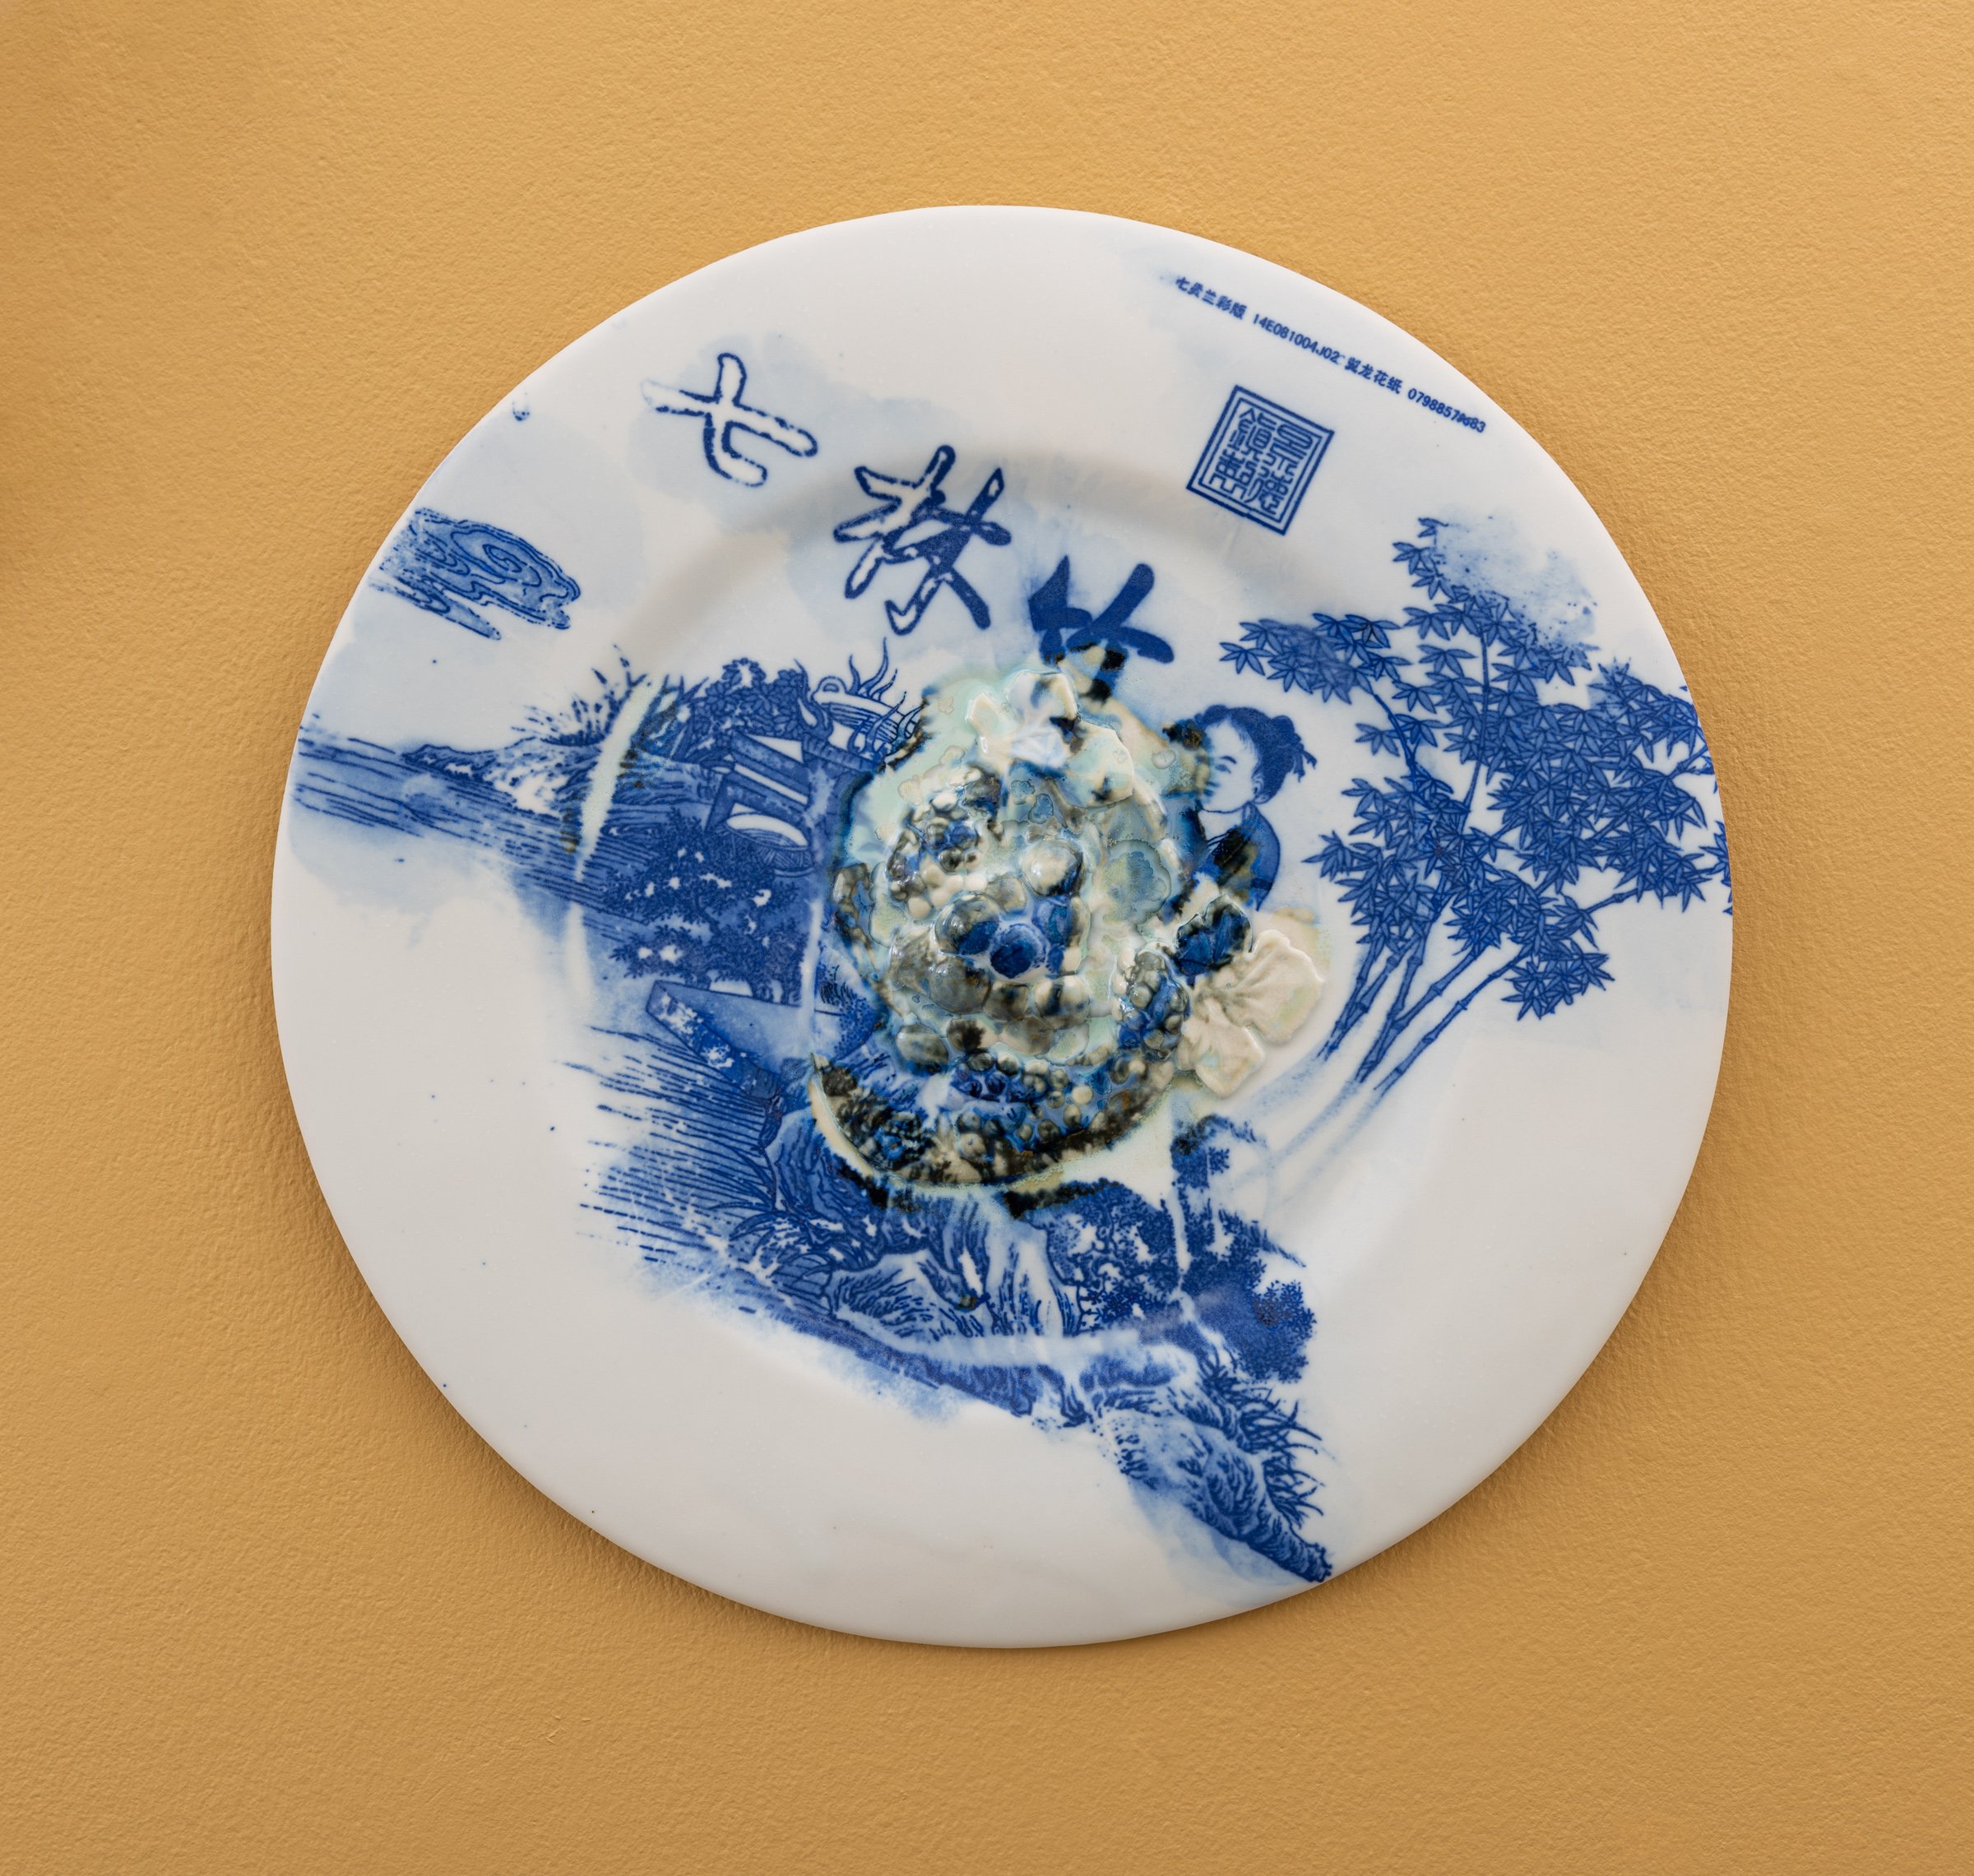  Why do Europeans put plates on their walls? XV | 2022  Porcelain, glazes, porcelain decals and tissue paper, press molding. 35x35x3cm  Photo: Thomas Tveter 